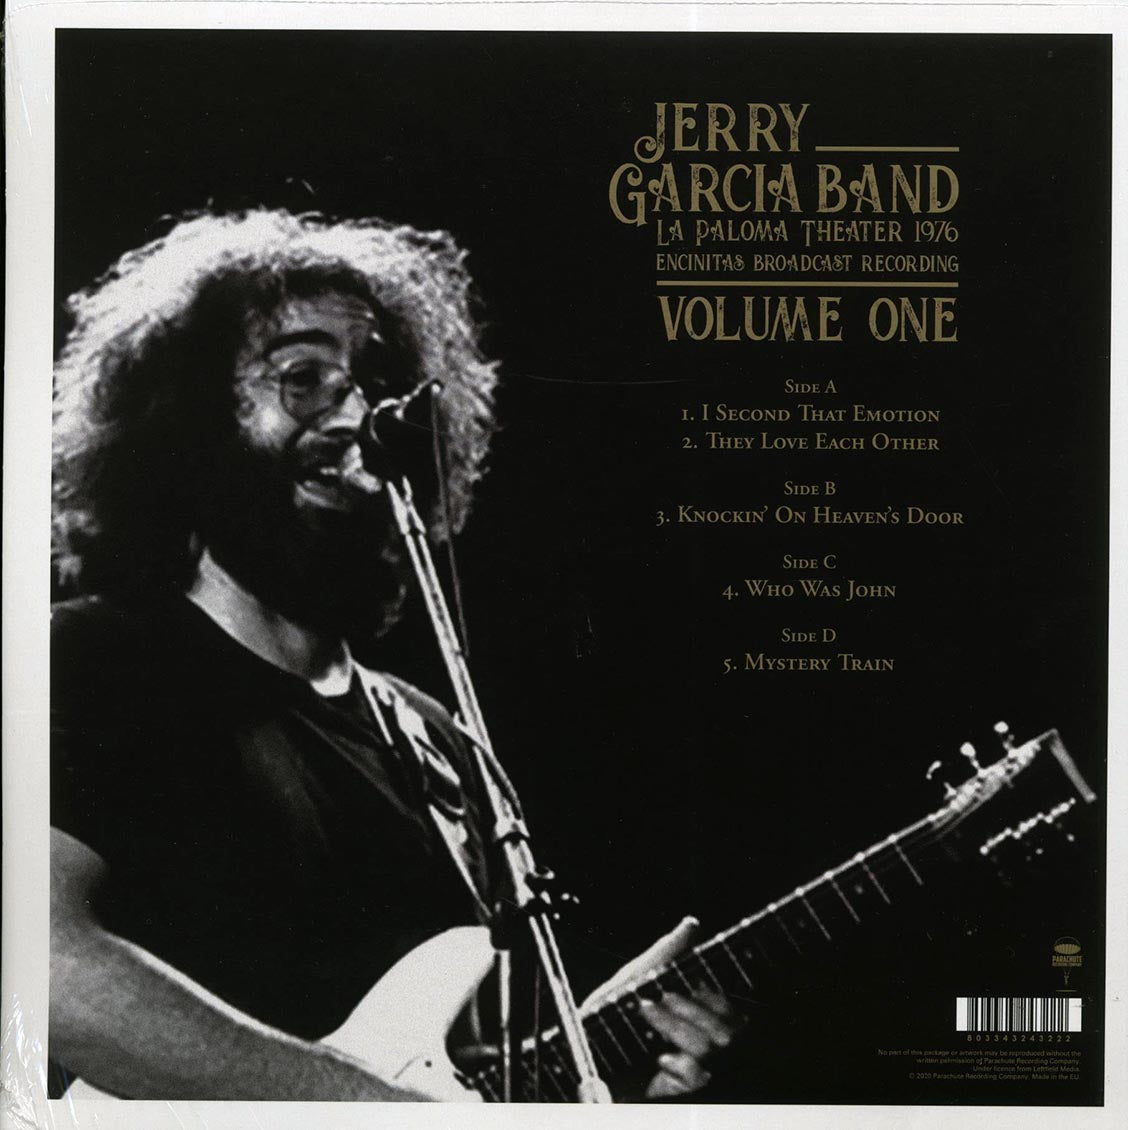 The Jerry Garcia Band - La Paloma Theater 1976 Volume 1: Encinitas Broadcast Recording (2xLP) - Vinyl LP, LP